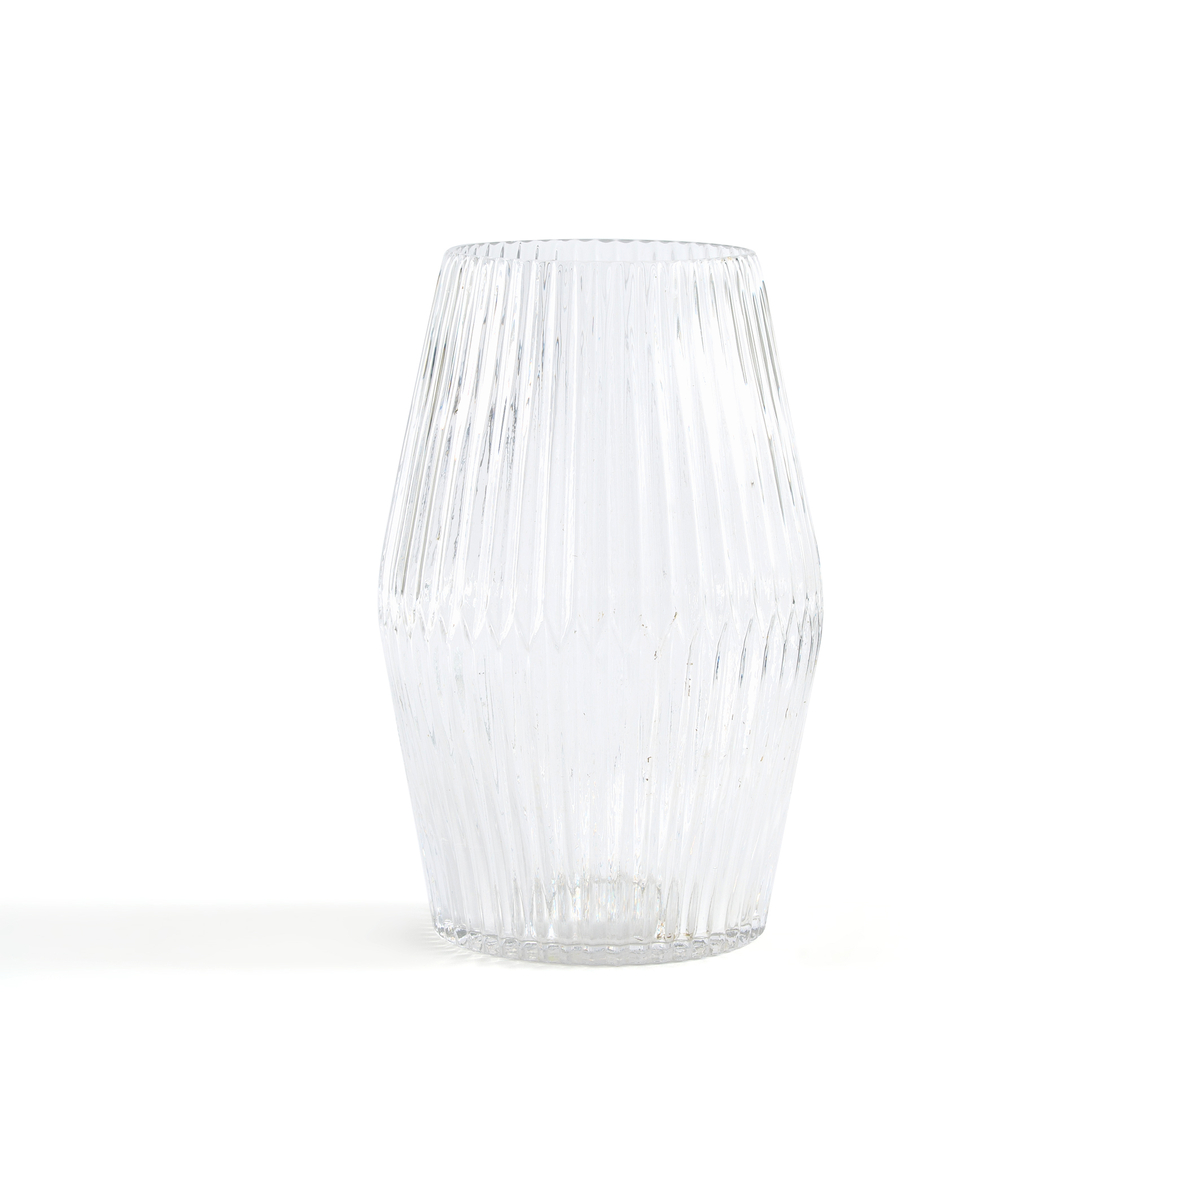 Afa 25cm High Cylindrical Grooved Glass Vase